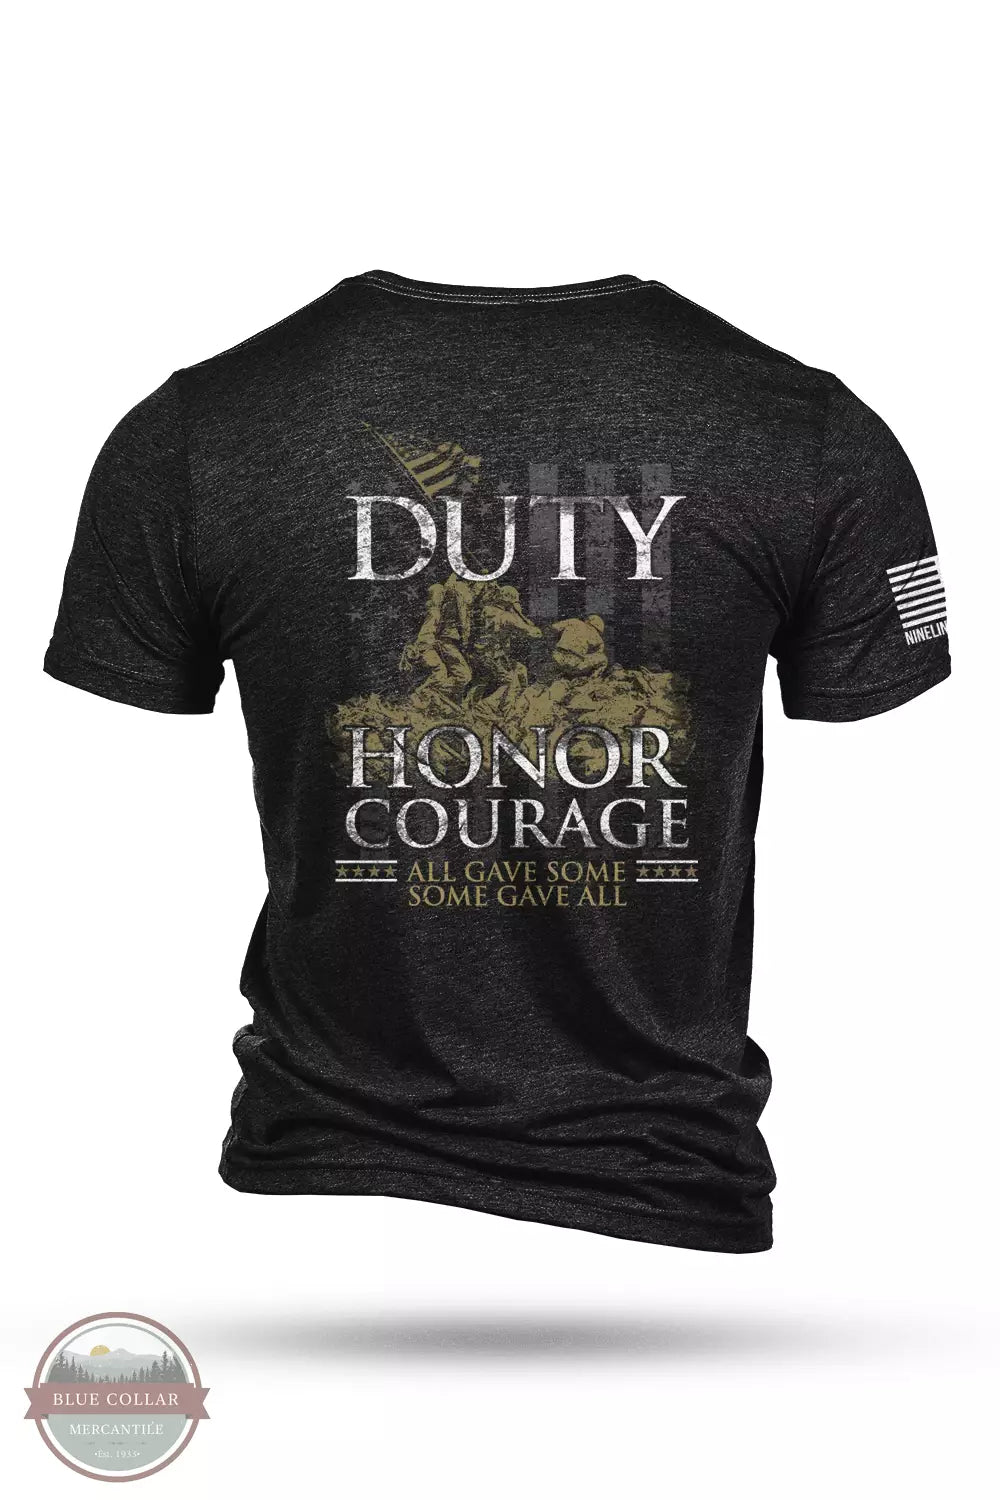 Nine Line DUTYHONOR-TSTRI-CHARCOALBLACK Duty Honor Courage Tri-Blend Short Sleeve T-Shirt in Charcoal Black Back View